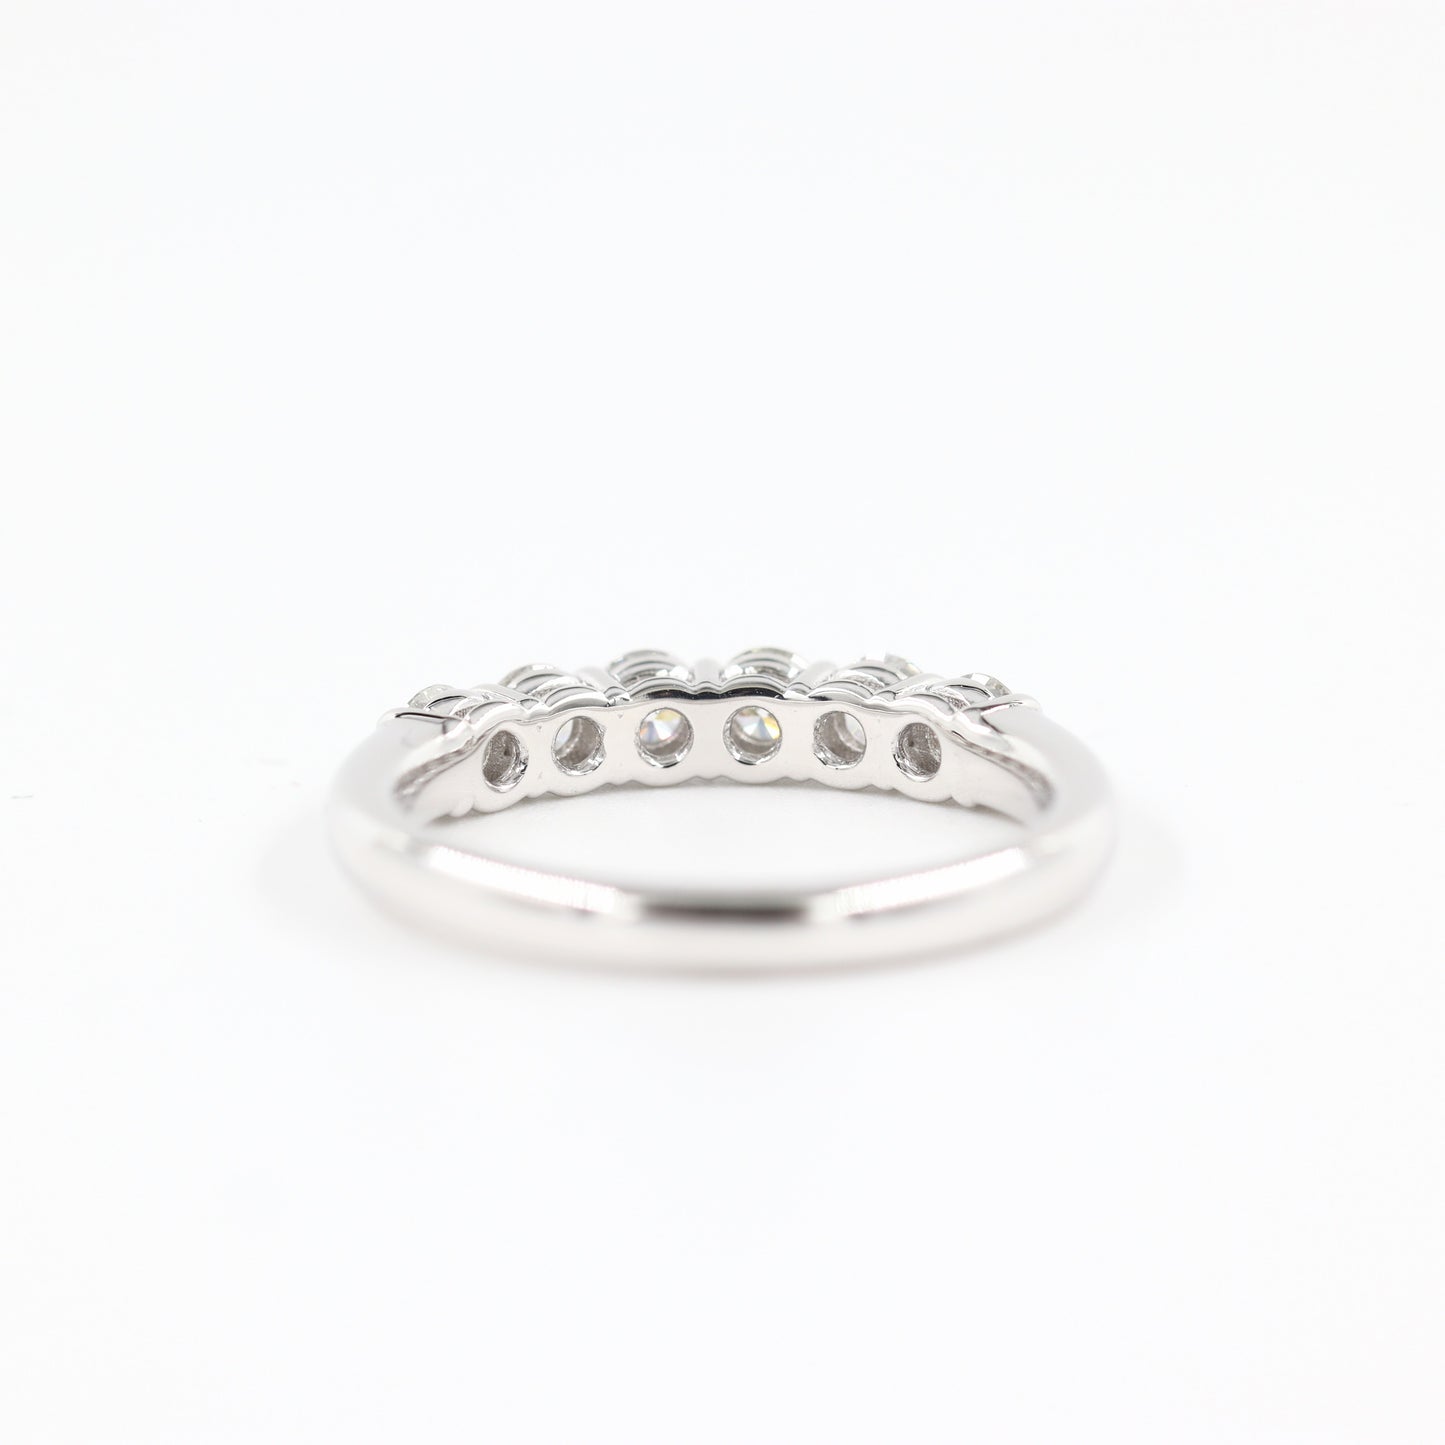 Diamond 6stones Wedding Band/Stackable Flat Wedding Ring/100% Natural White Diamond/3mm Width Wedding Band/14K Gold Eternity Ring